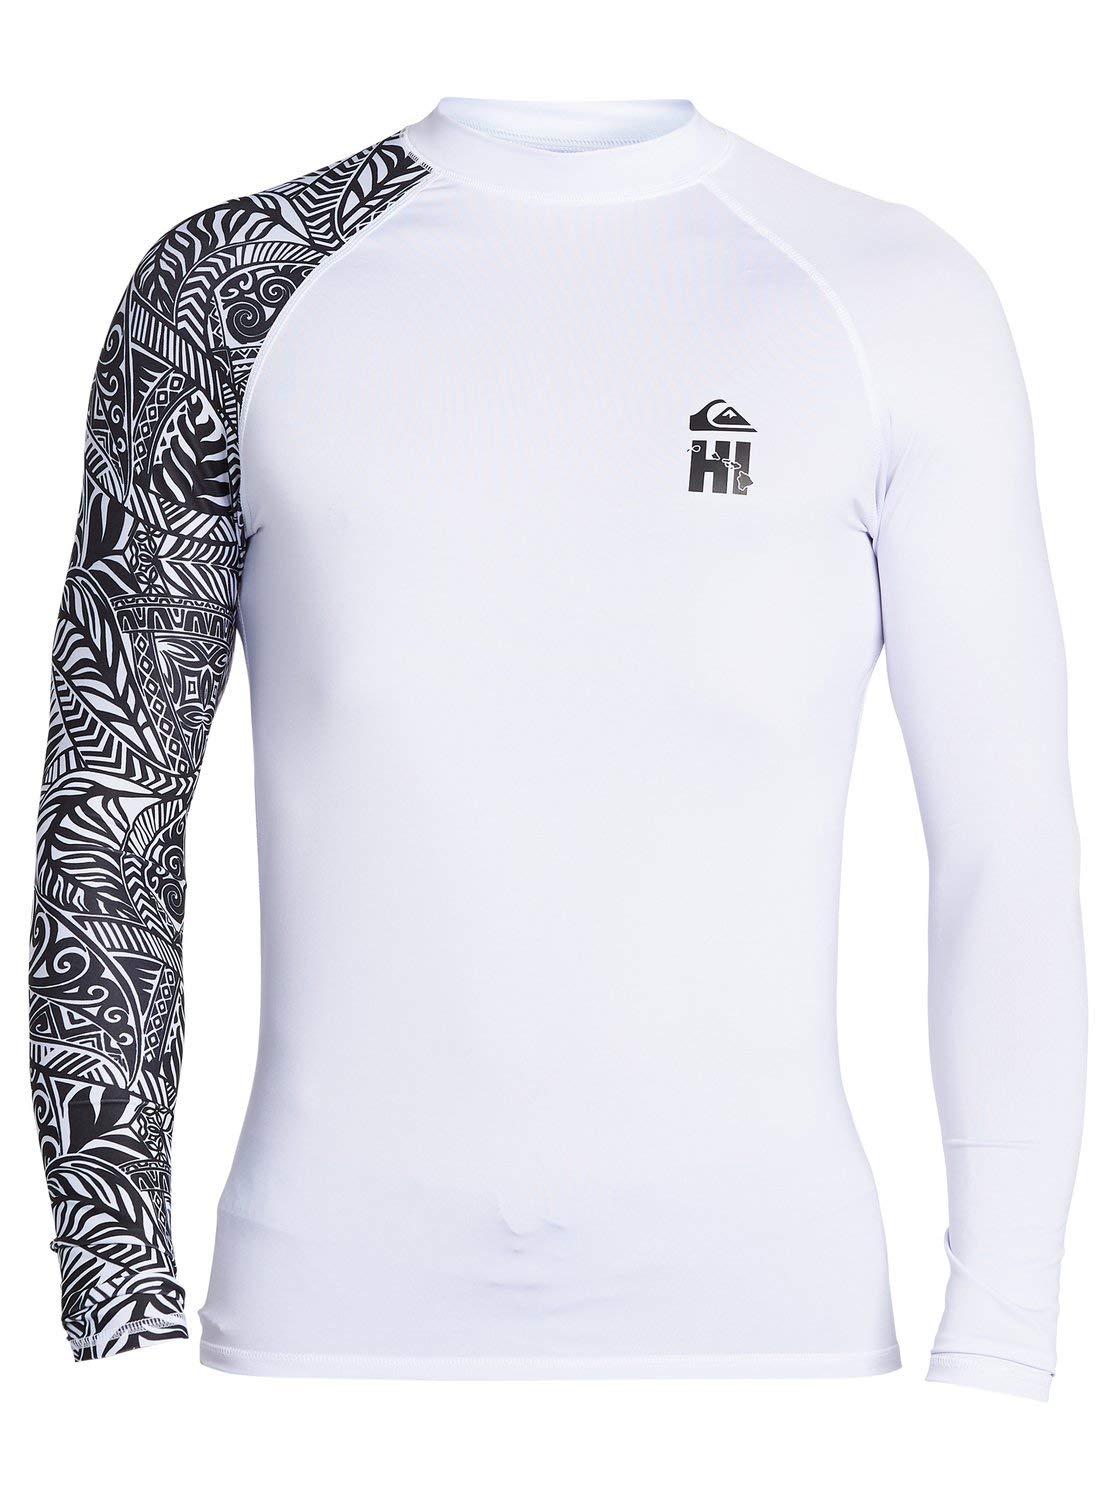 Quiksilver Standard Ma Kai Ls Long Sleeve Rashguard Surf Shirt in 